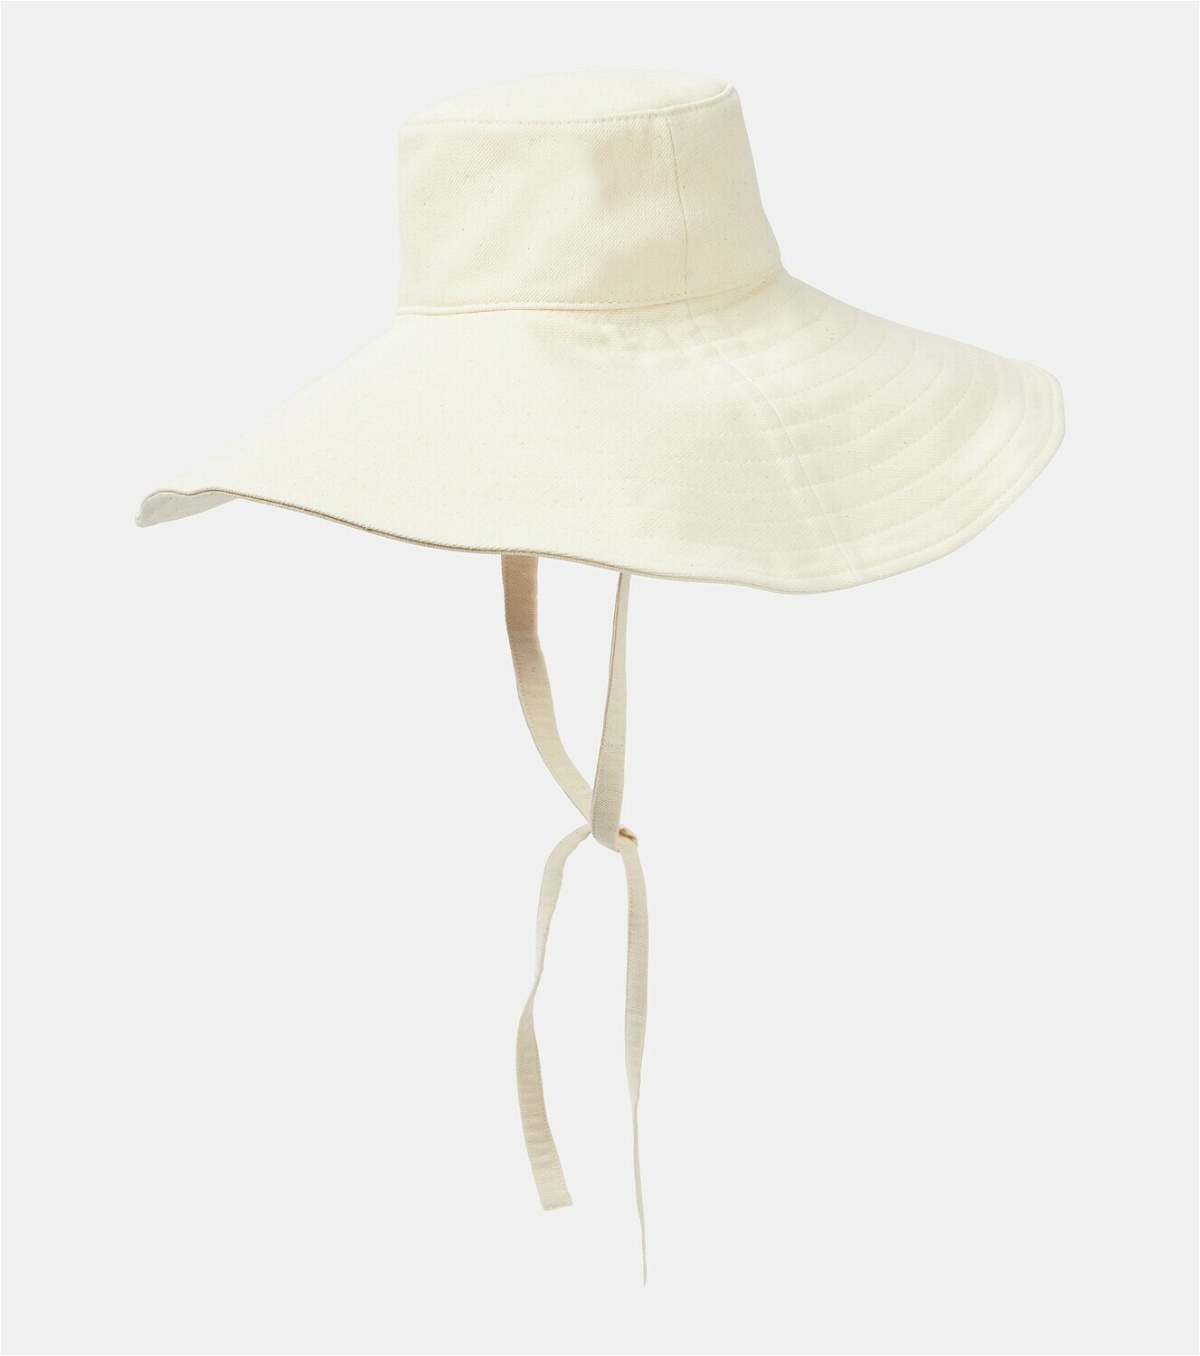 Ruslan Baginskiy Cotton canvas bucket hat